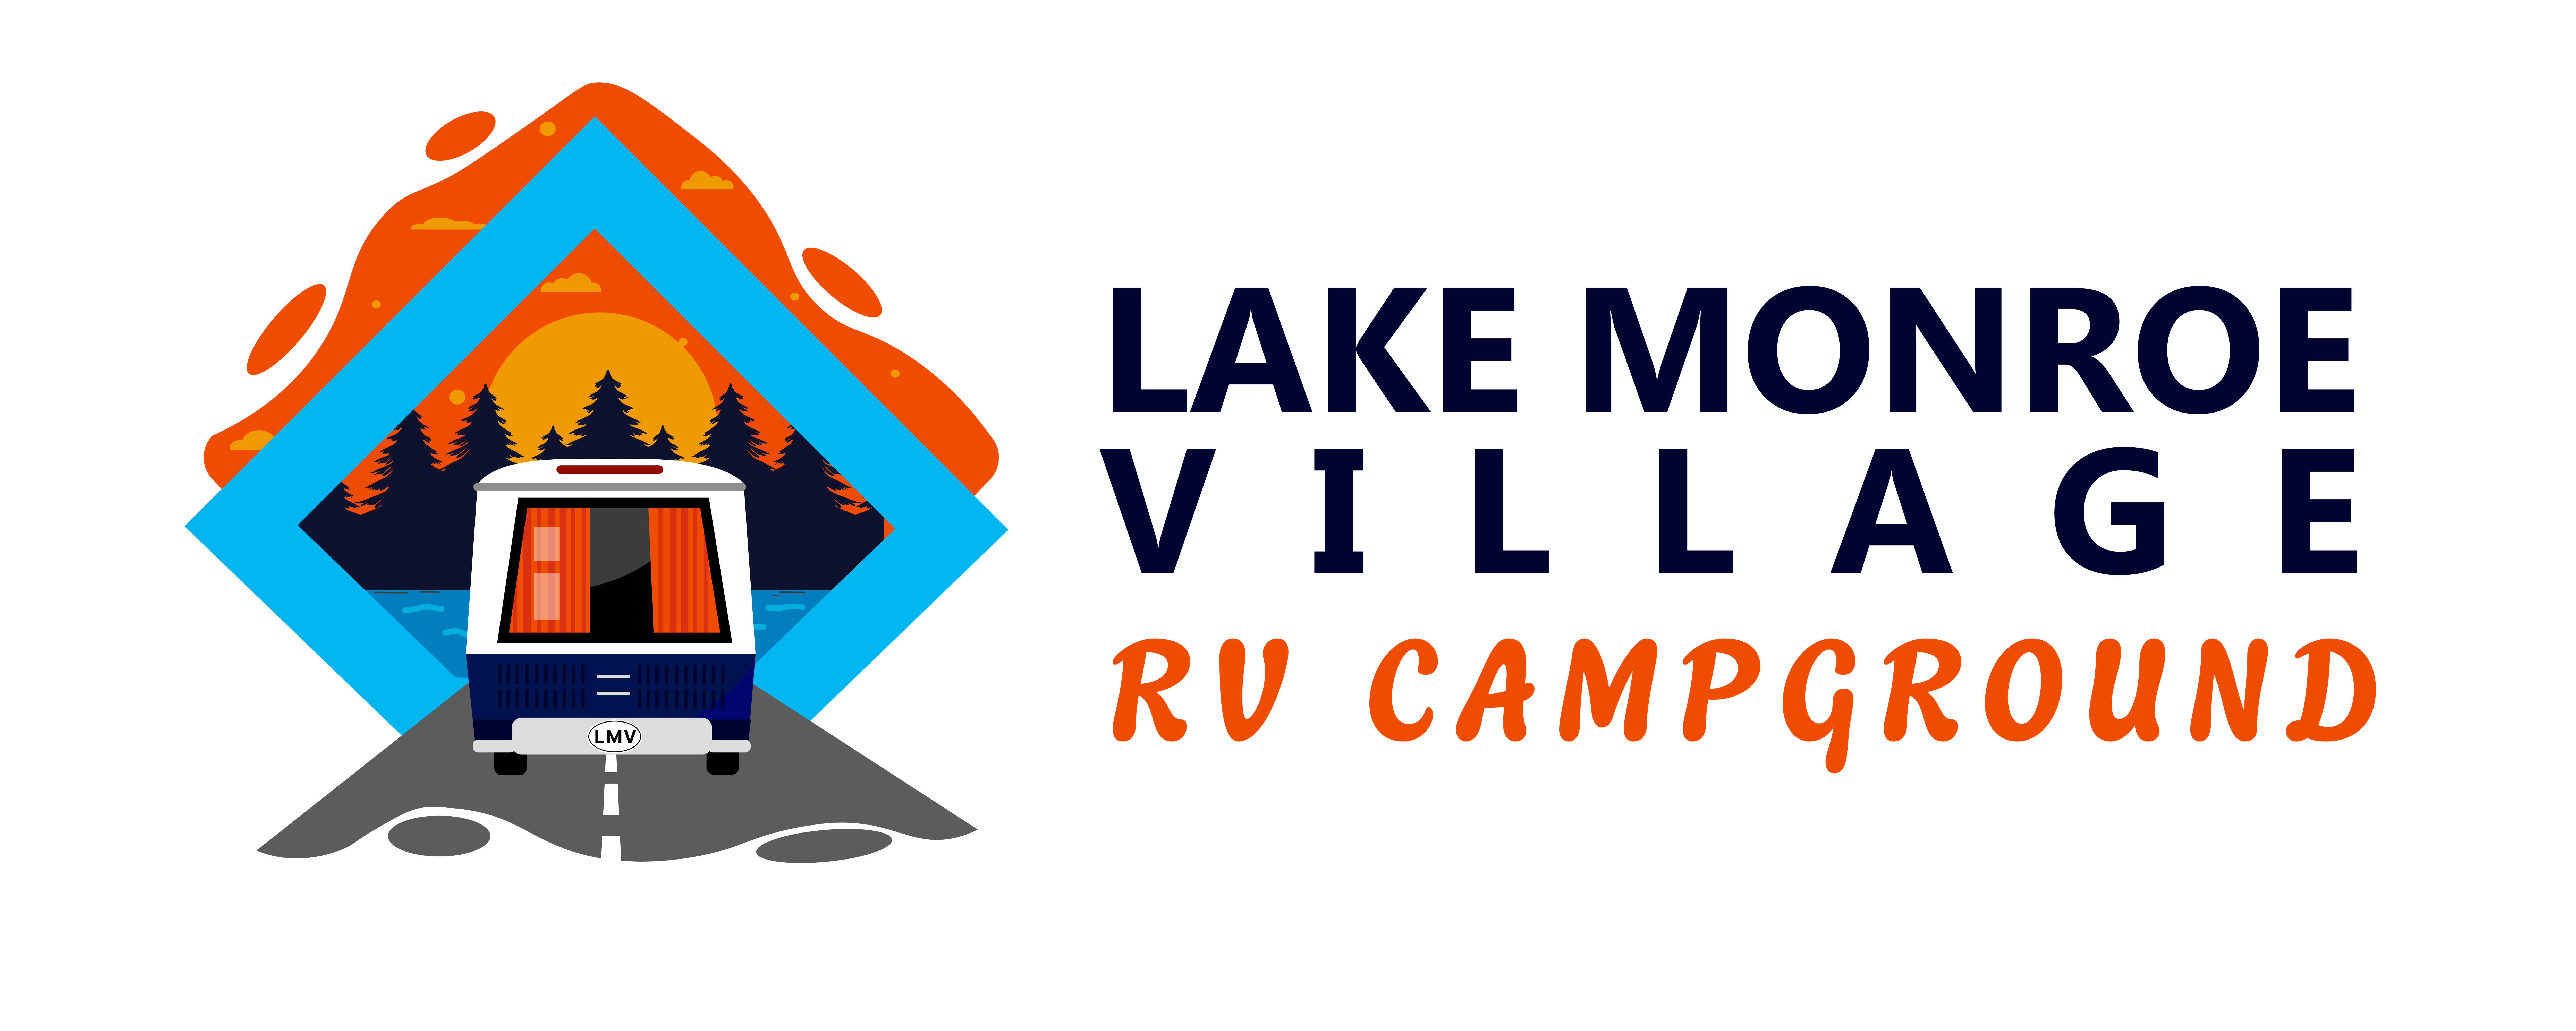 Lake Monroe Village RV Campground